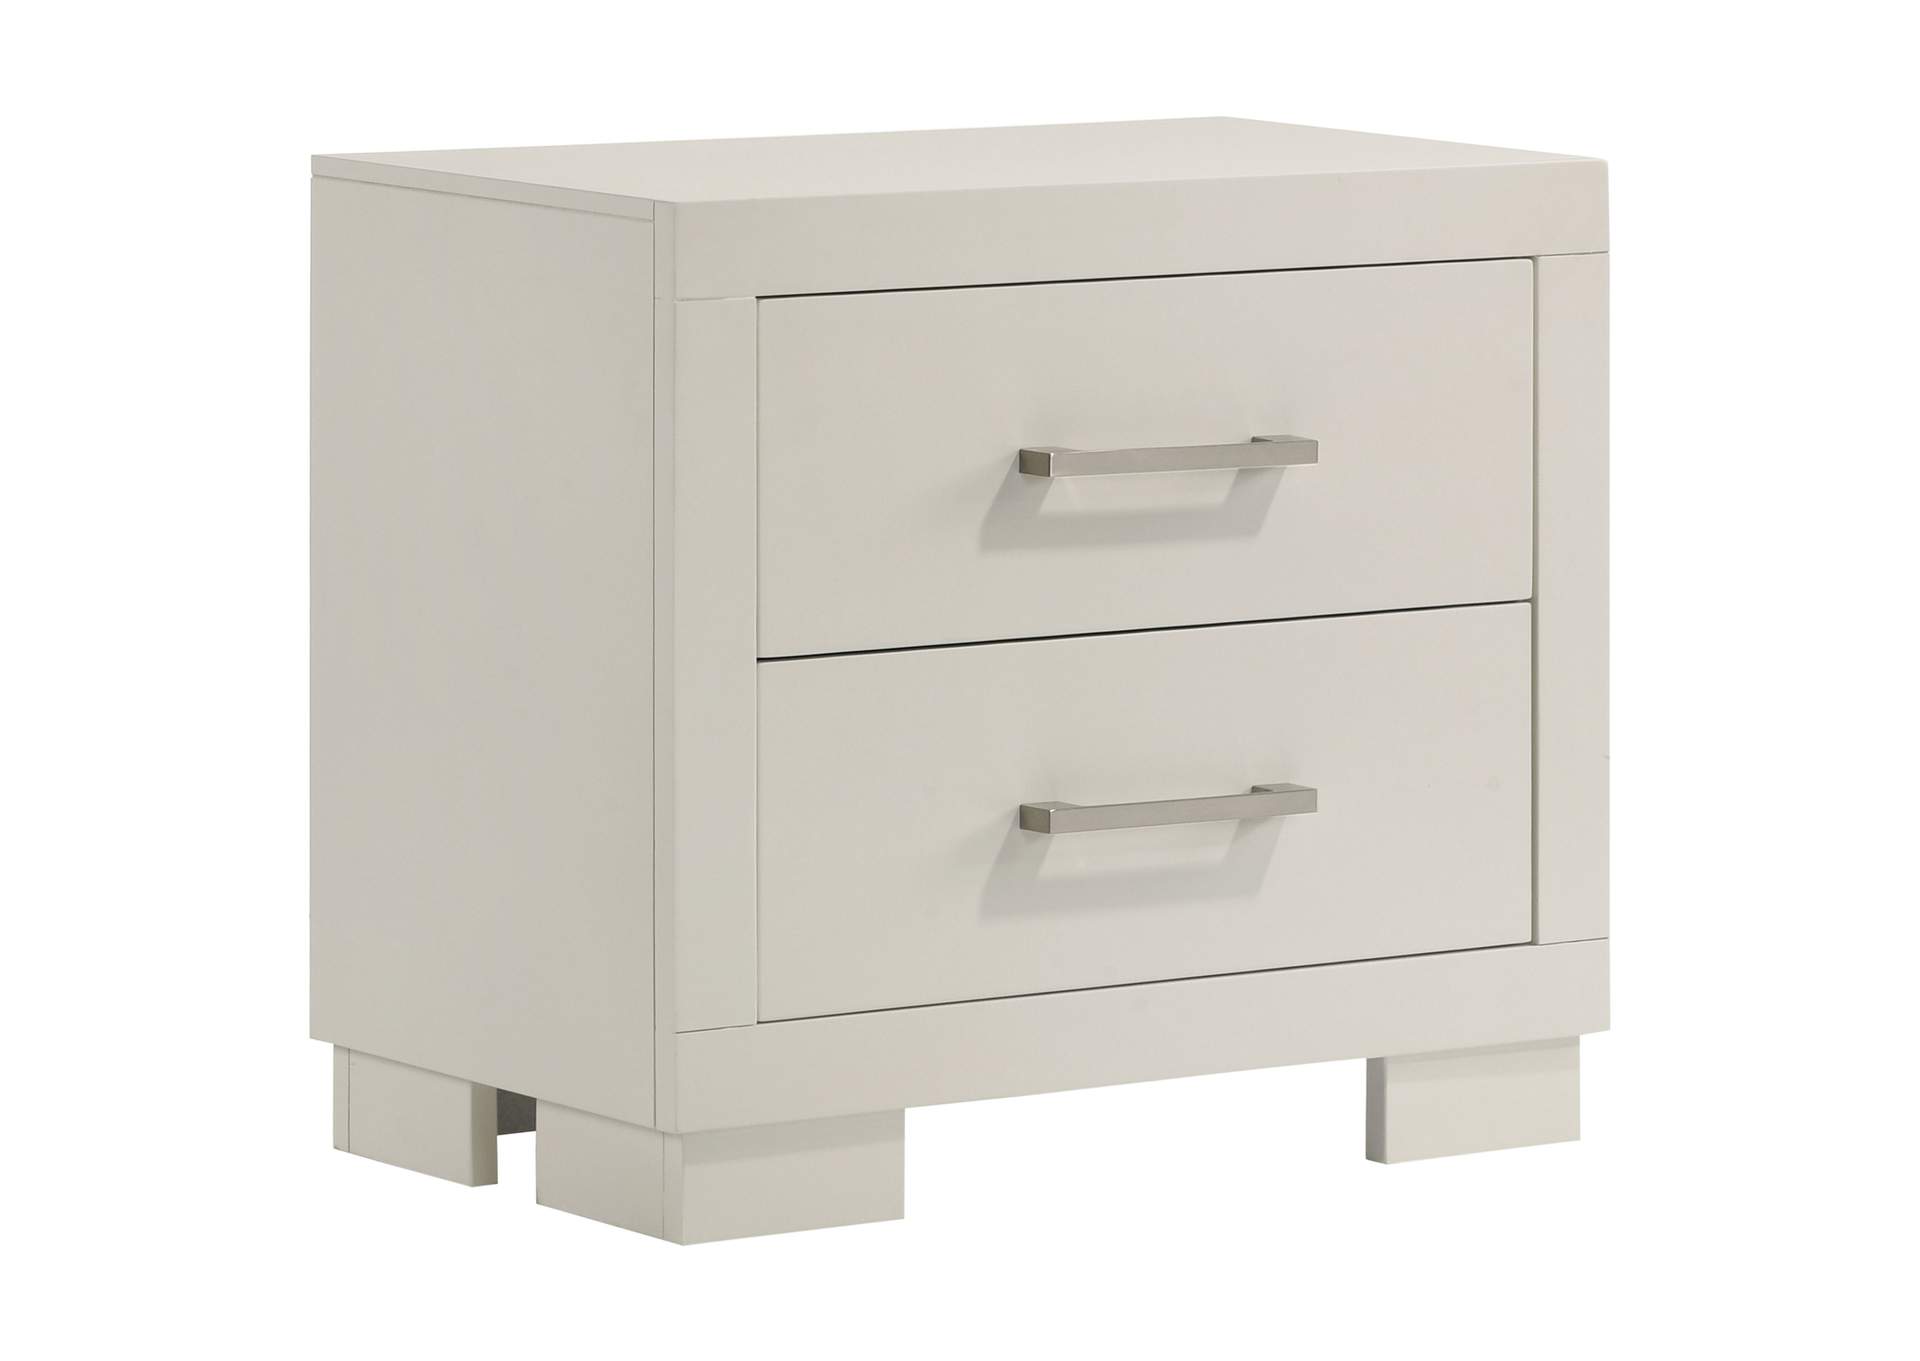 Jessica 2-drawer Nightstand White,Coaster Furniture